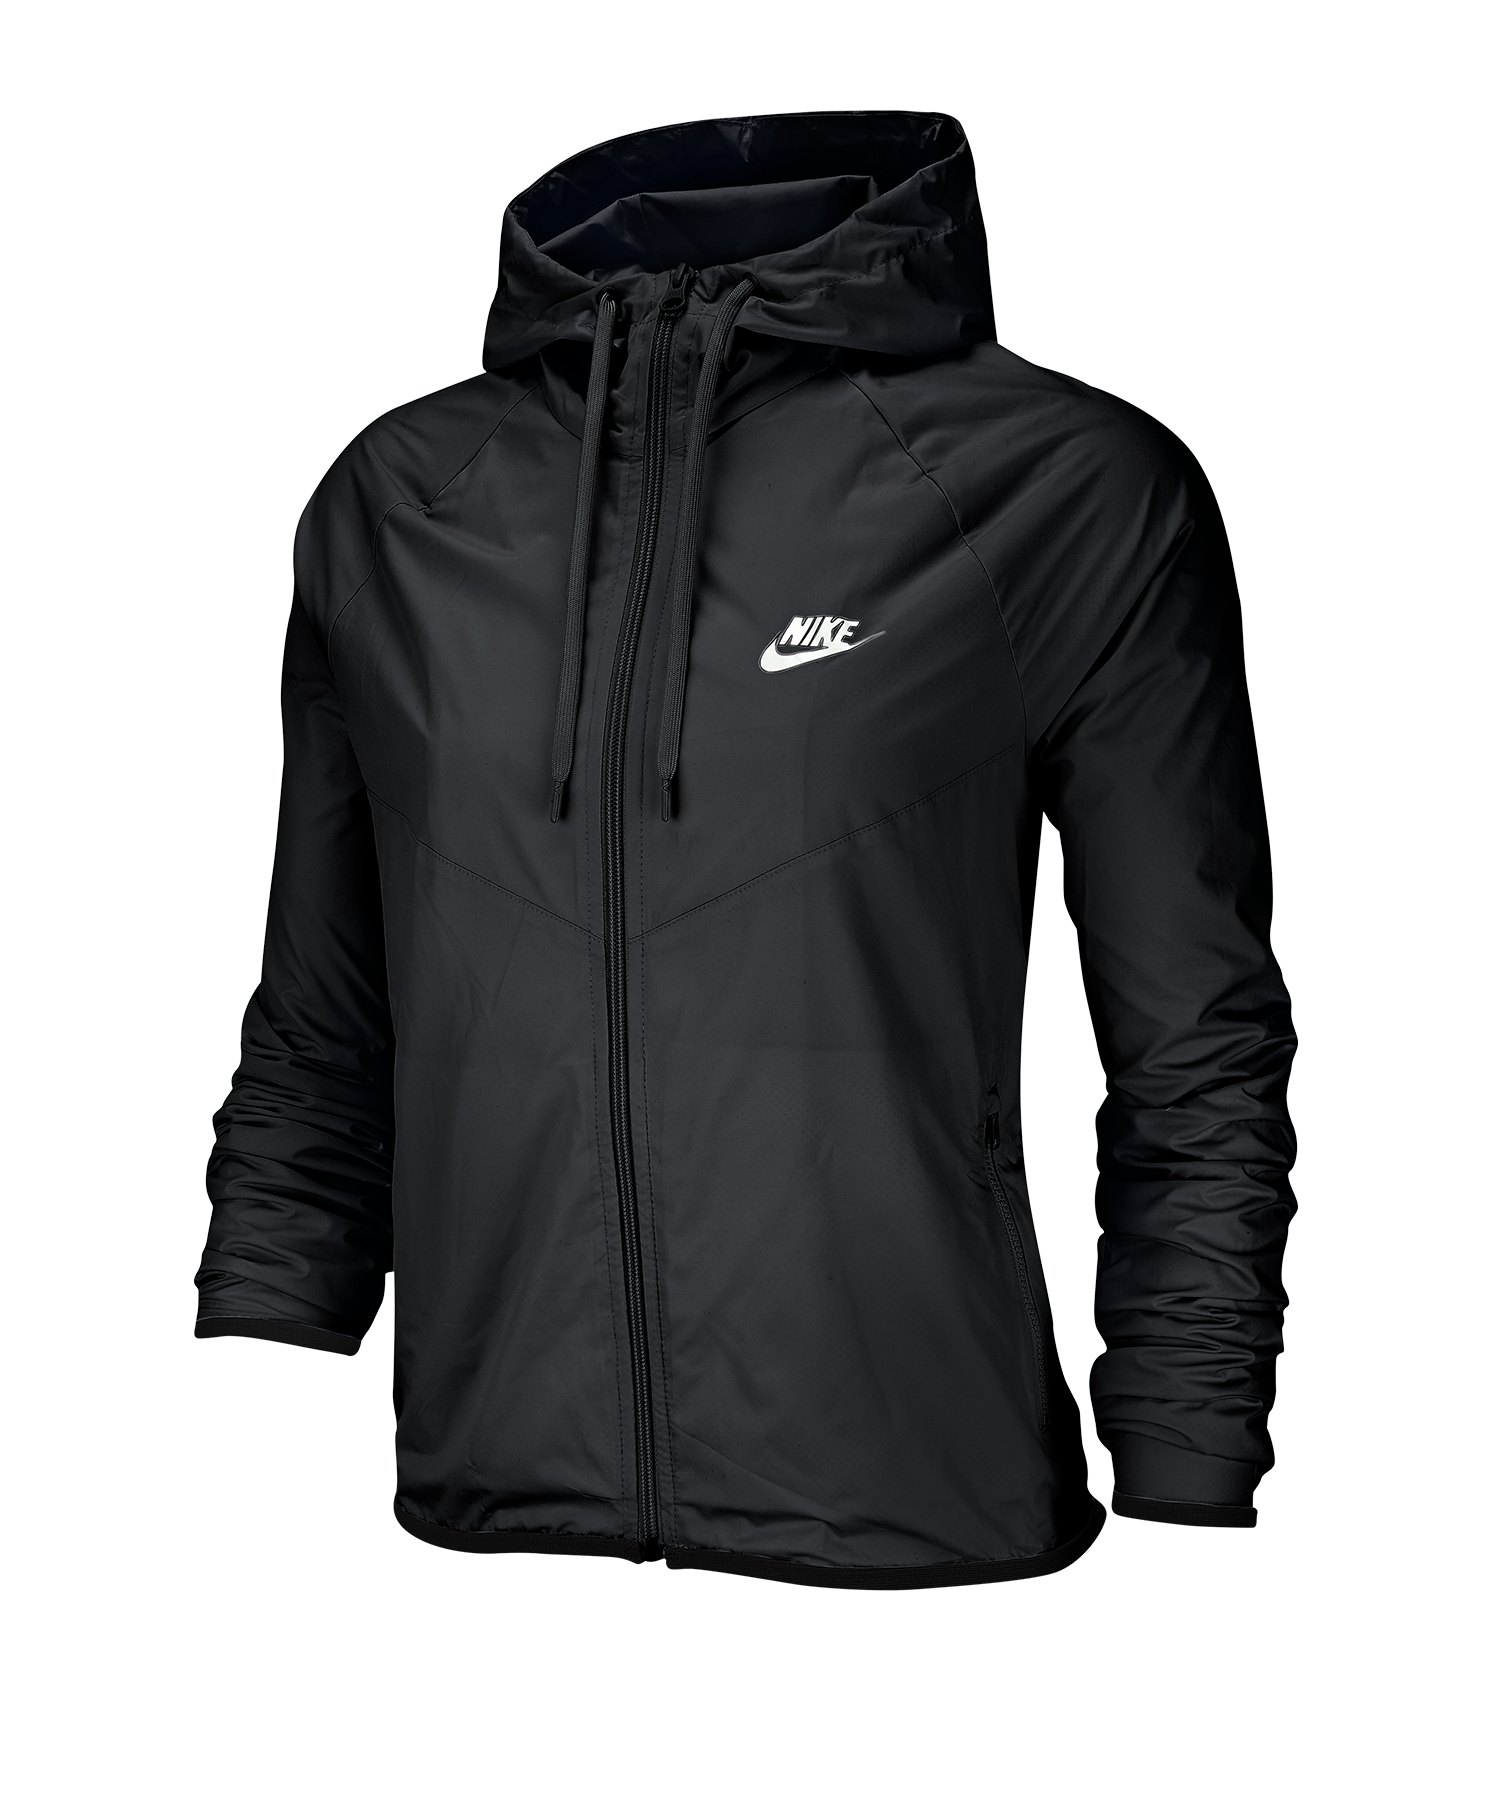 Nike Windrunner Jacke Damen Schwarz F010 - schwarz